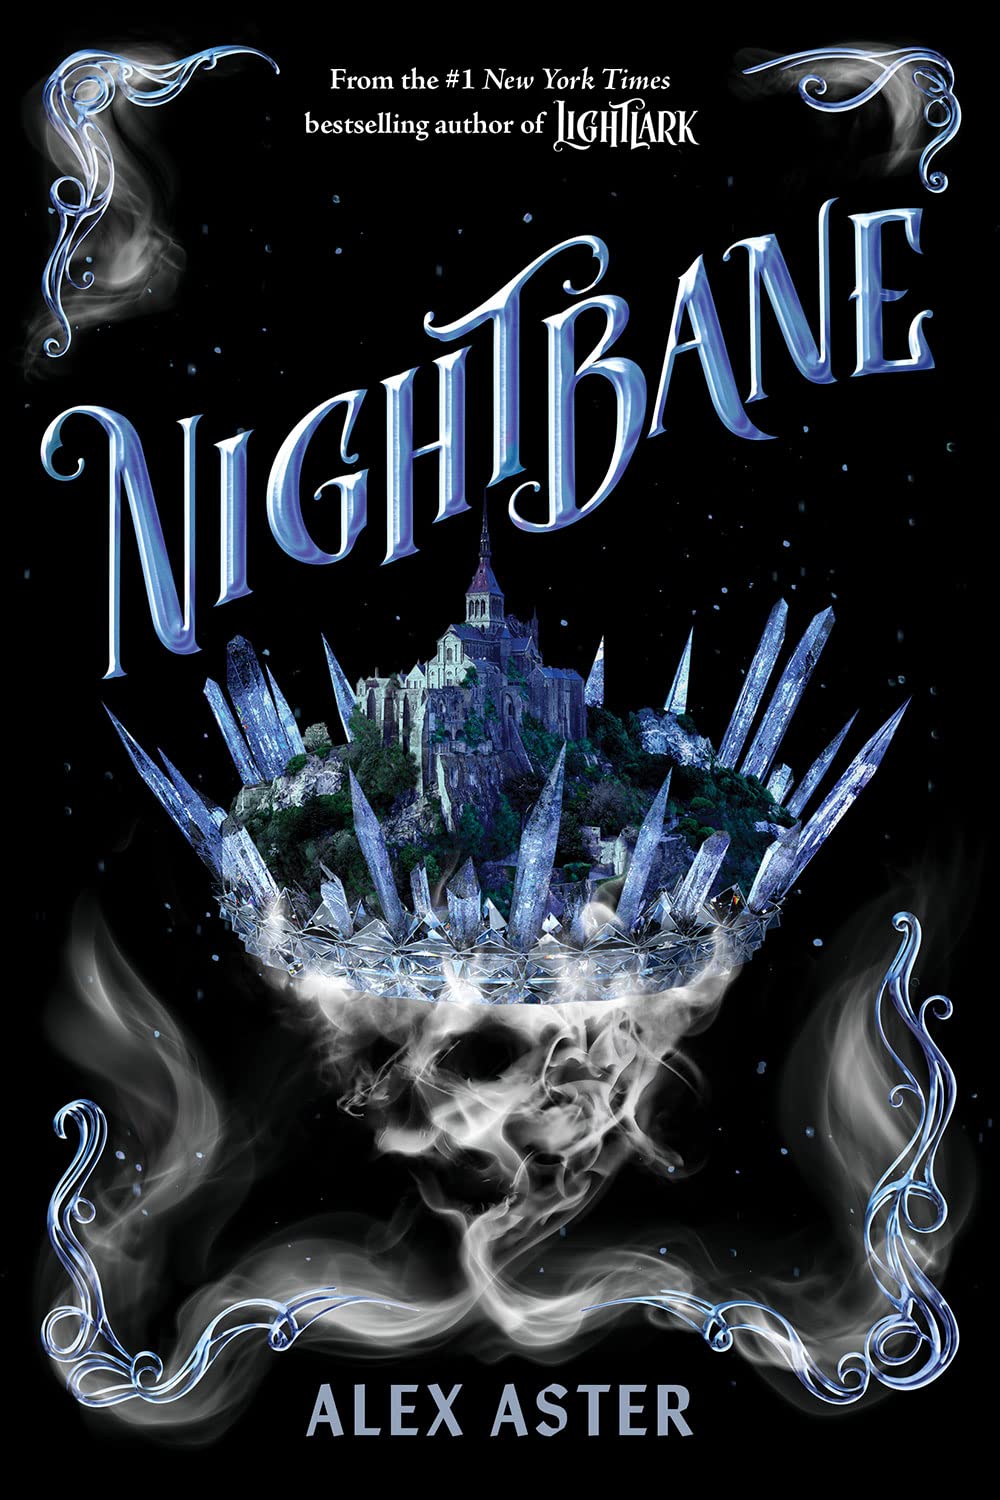 Nightbane (The Lightlark Saga Book 2) by Alex Aster